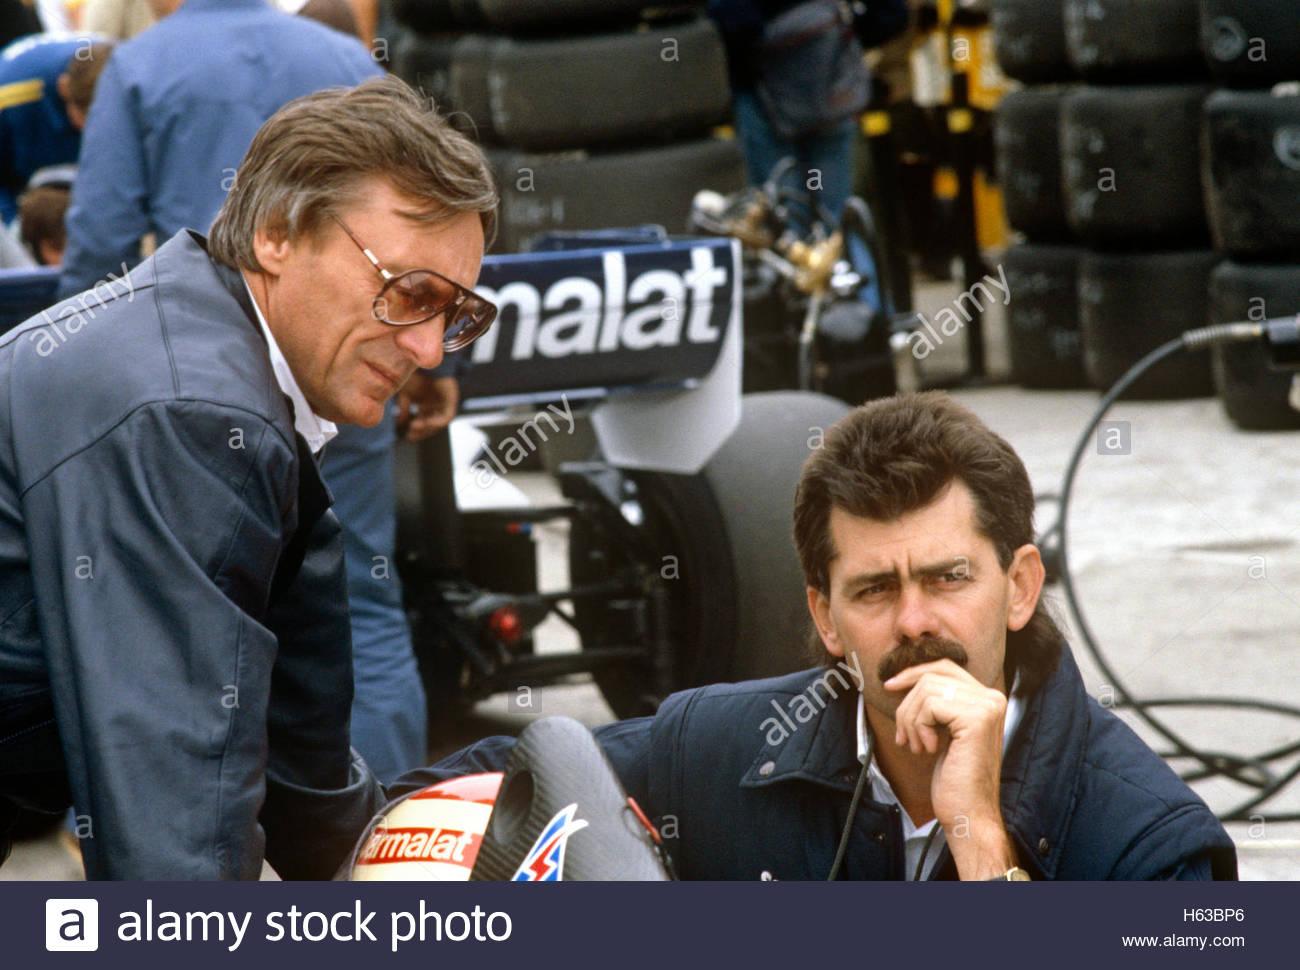 D:\Documenti\posts\posts\Gordon Murray - the leading F1 car designer of the 1970s and 1980s\foto\gordon-murray-and-bernie-ecclestone-1980s-H63BP6.jpg